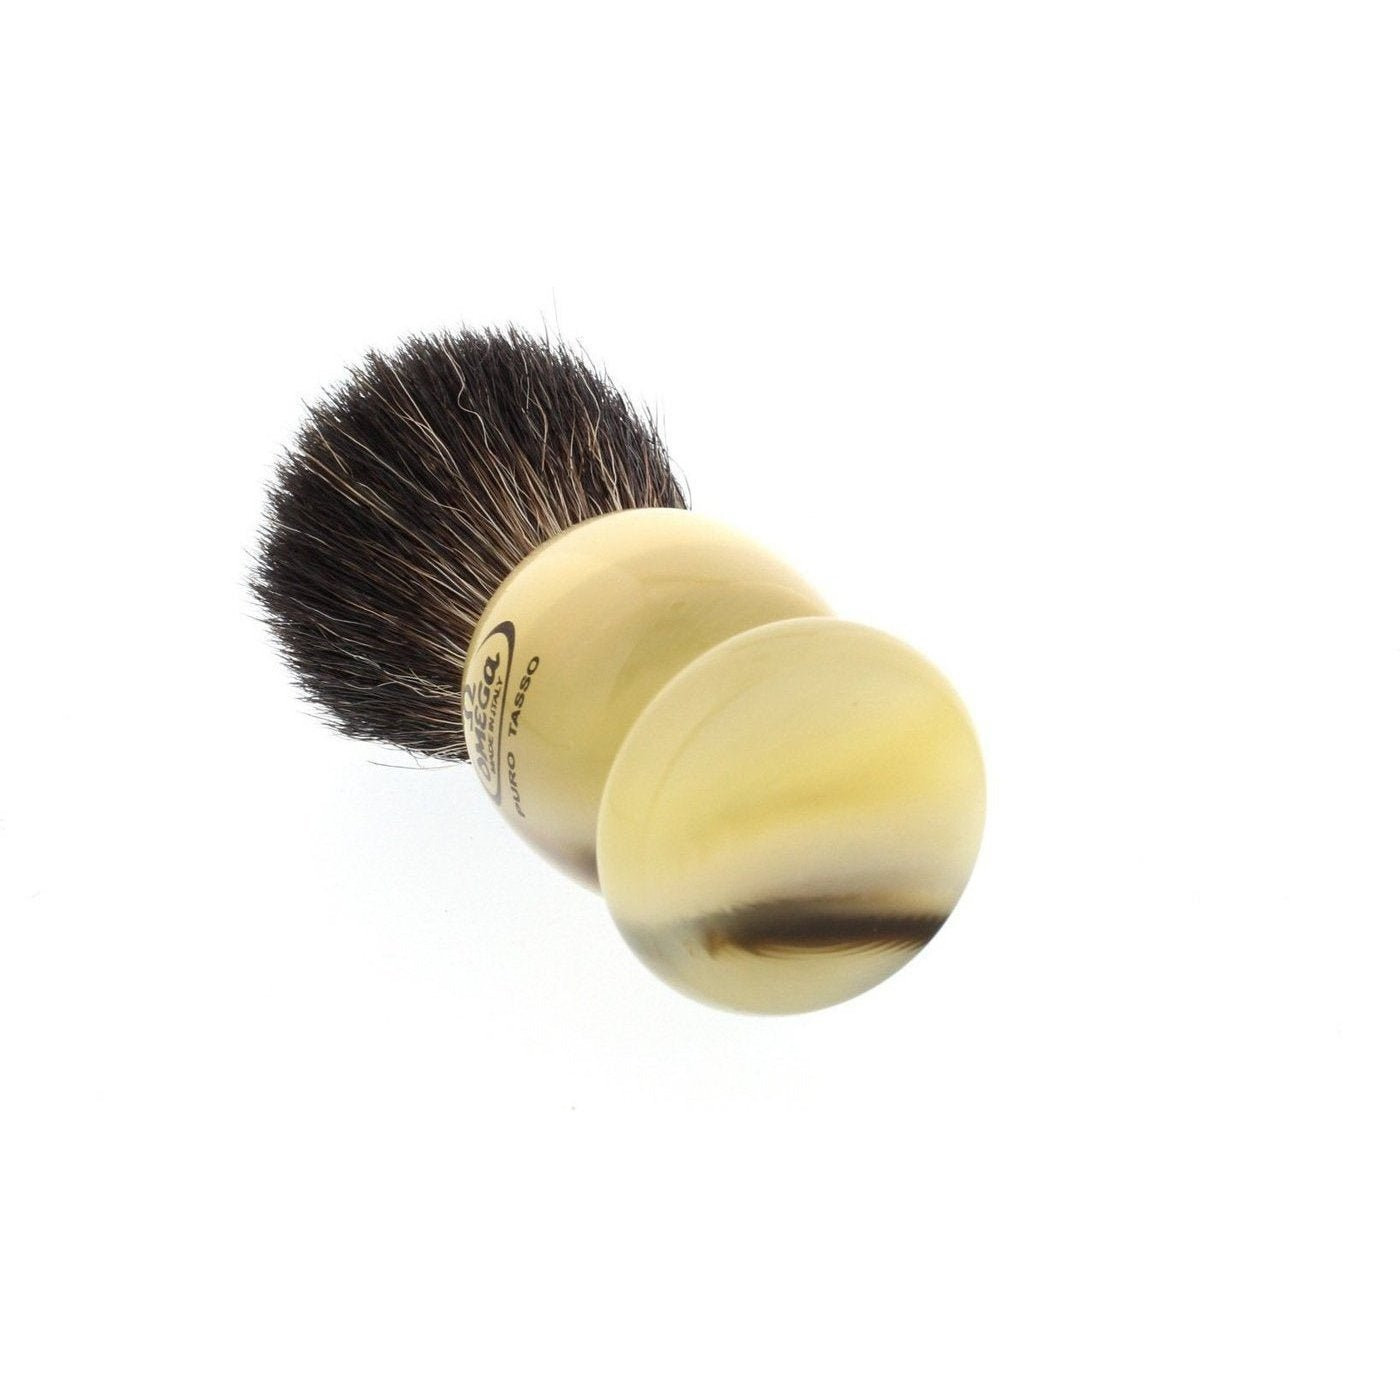 Product image 3 for Omega 63171 Pure Badger Shaving Brush